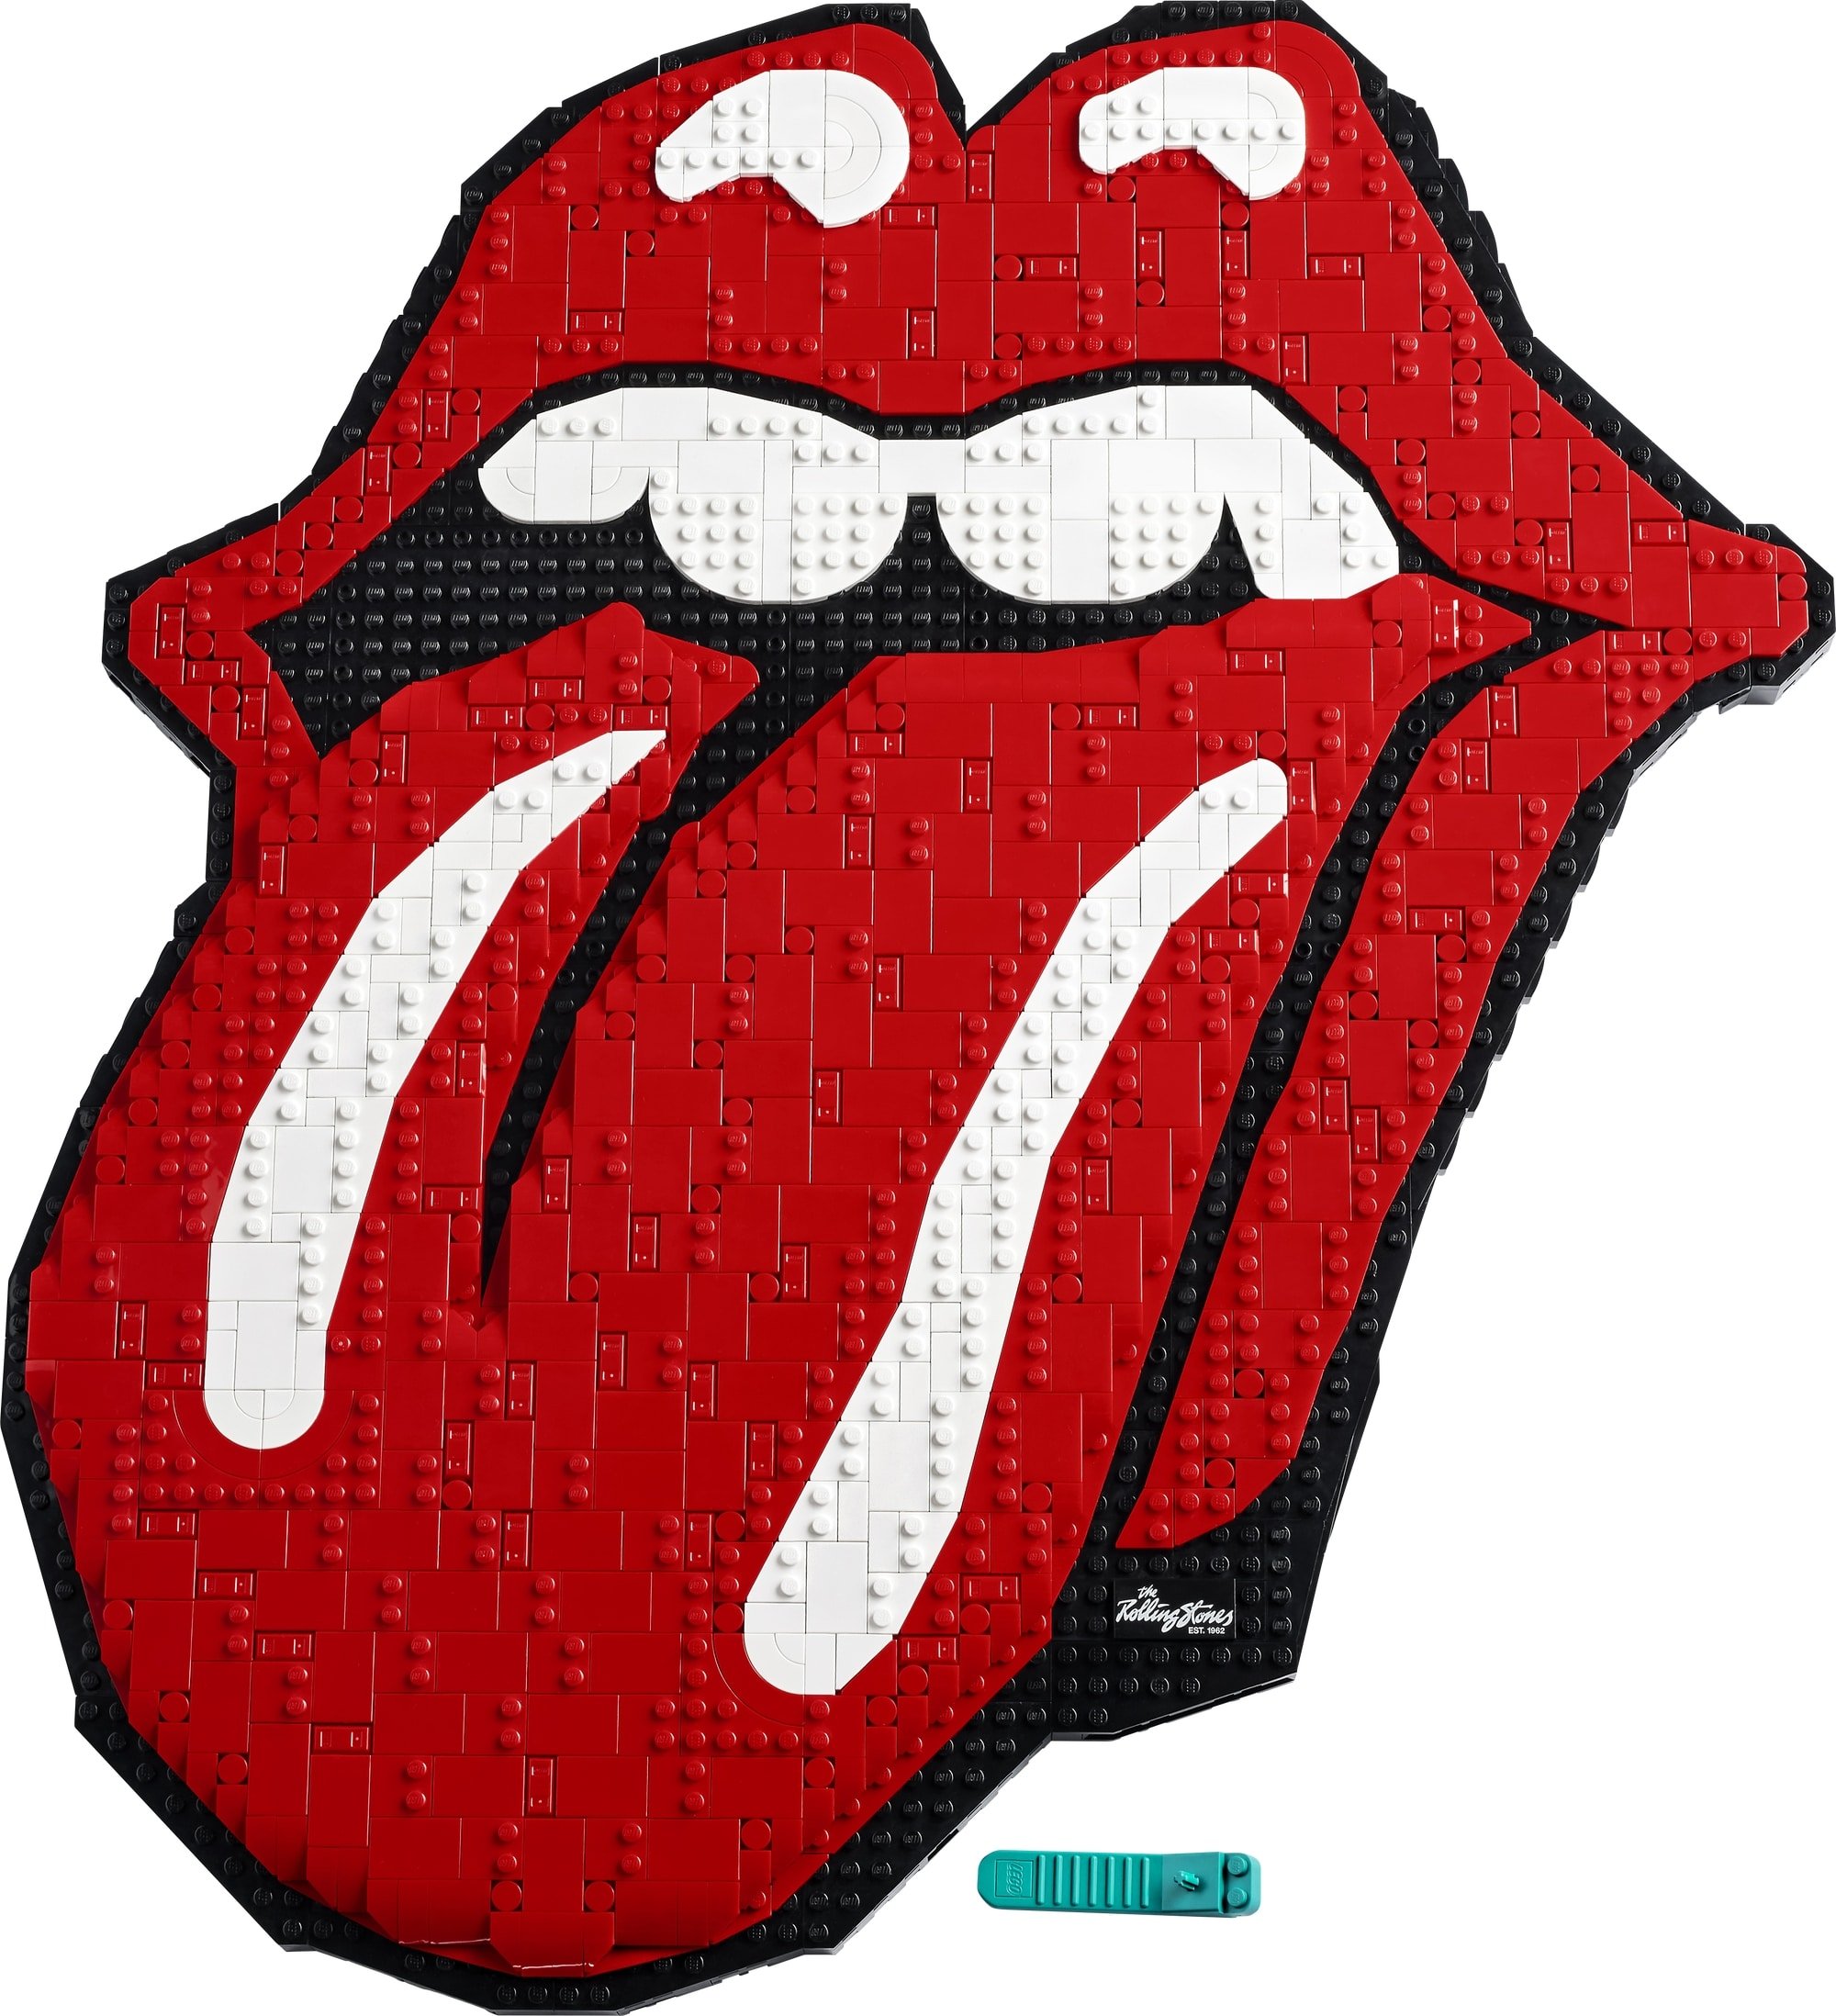 LEGO 31206 Rolling Stones